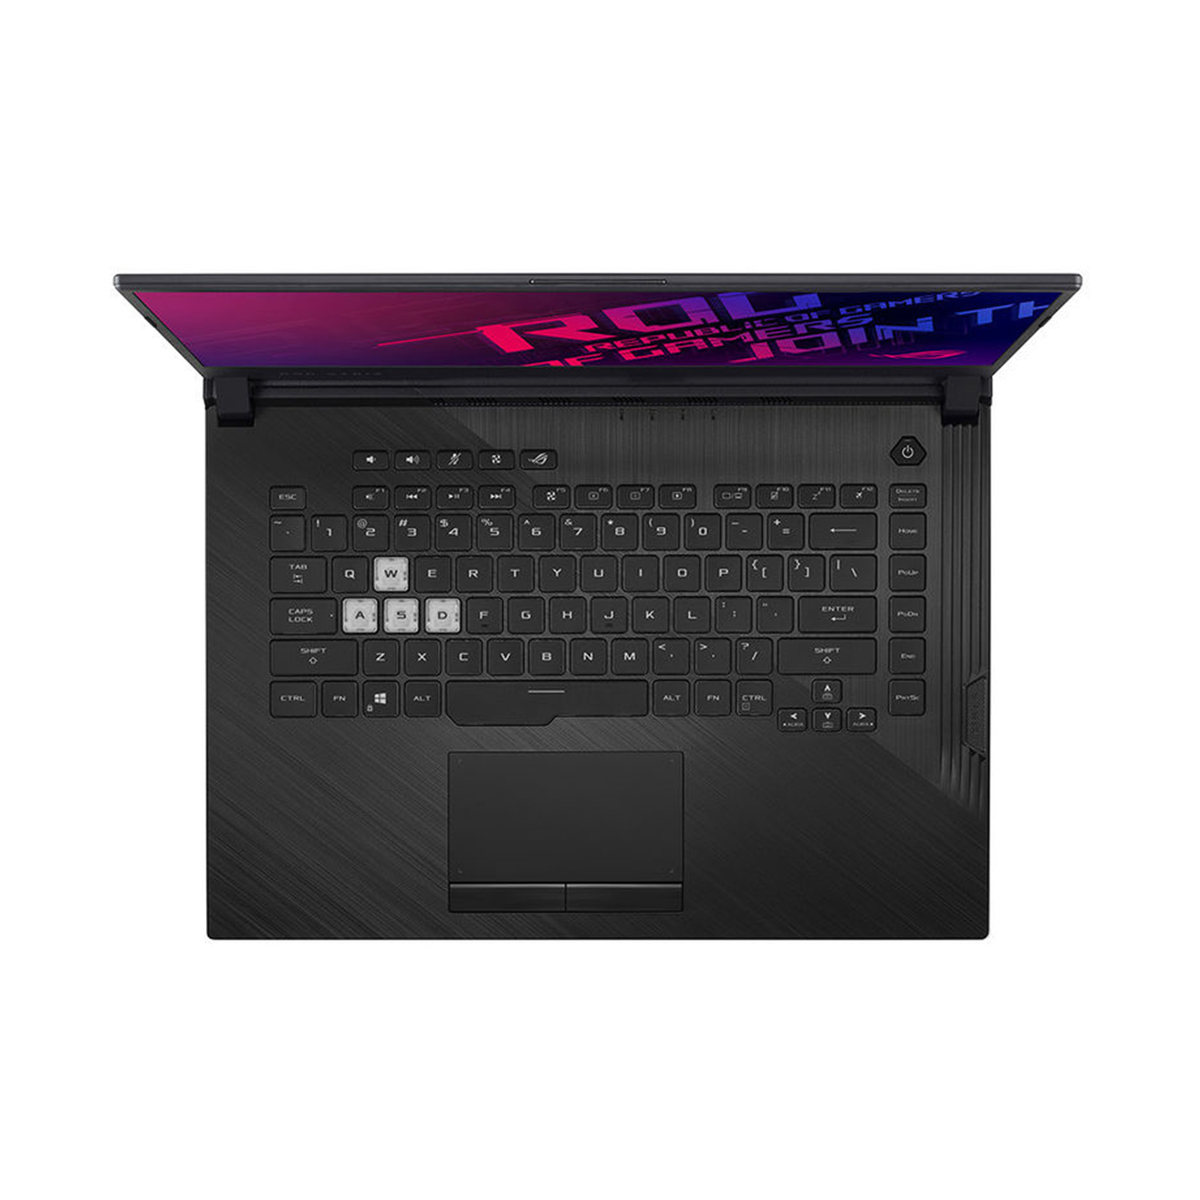 Asus ROG Strix Gaming Laptop G531GV-AL144T Core i7 Black